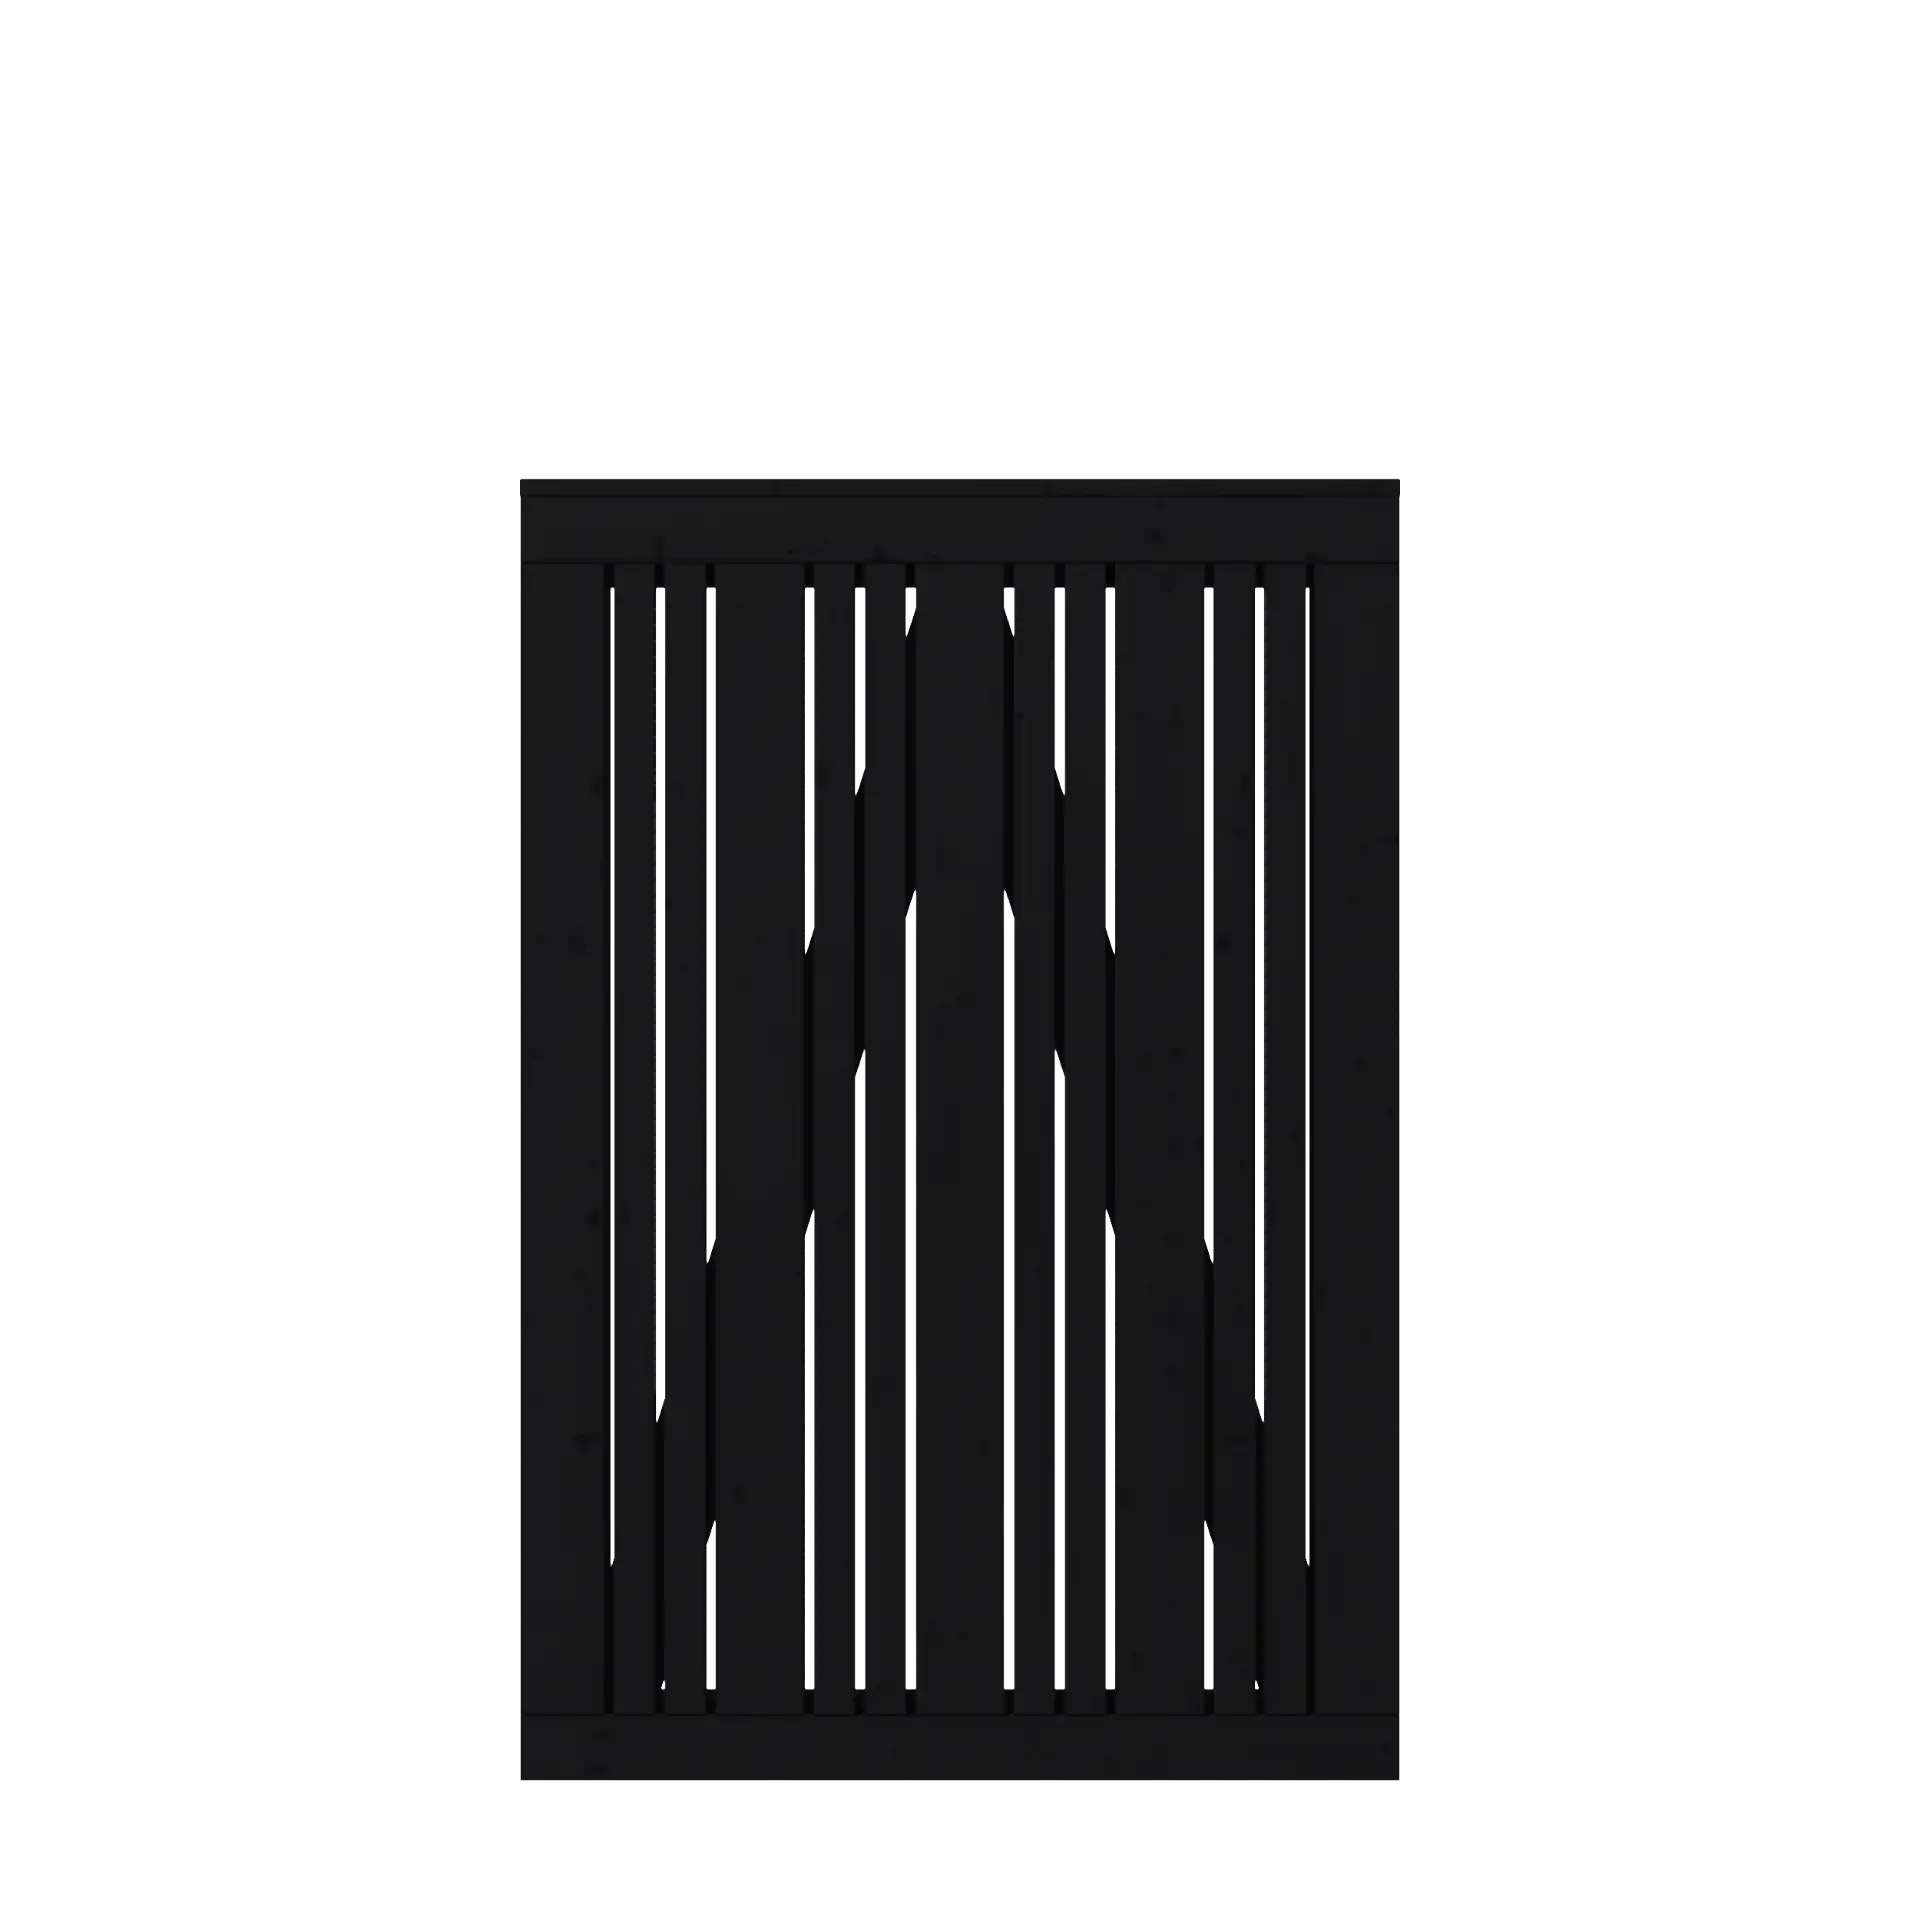 Tangent enkeltlge i sort 95x140cm (BxH)